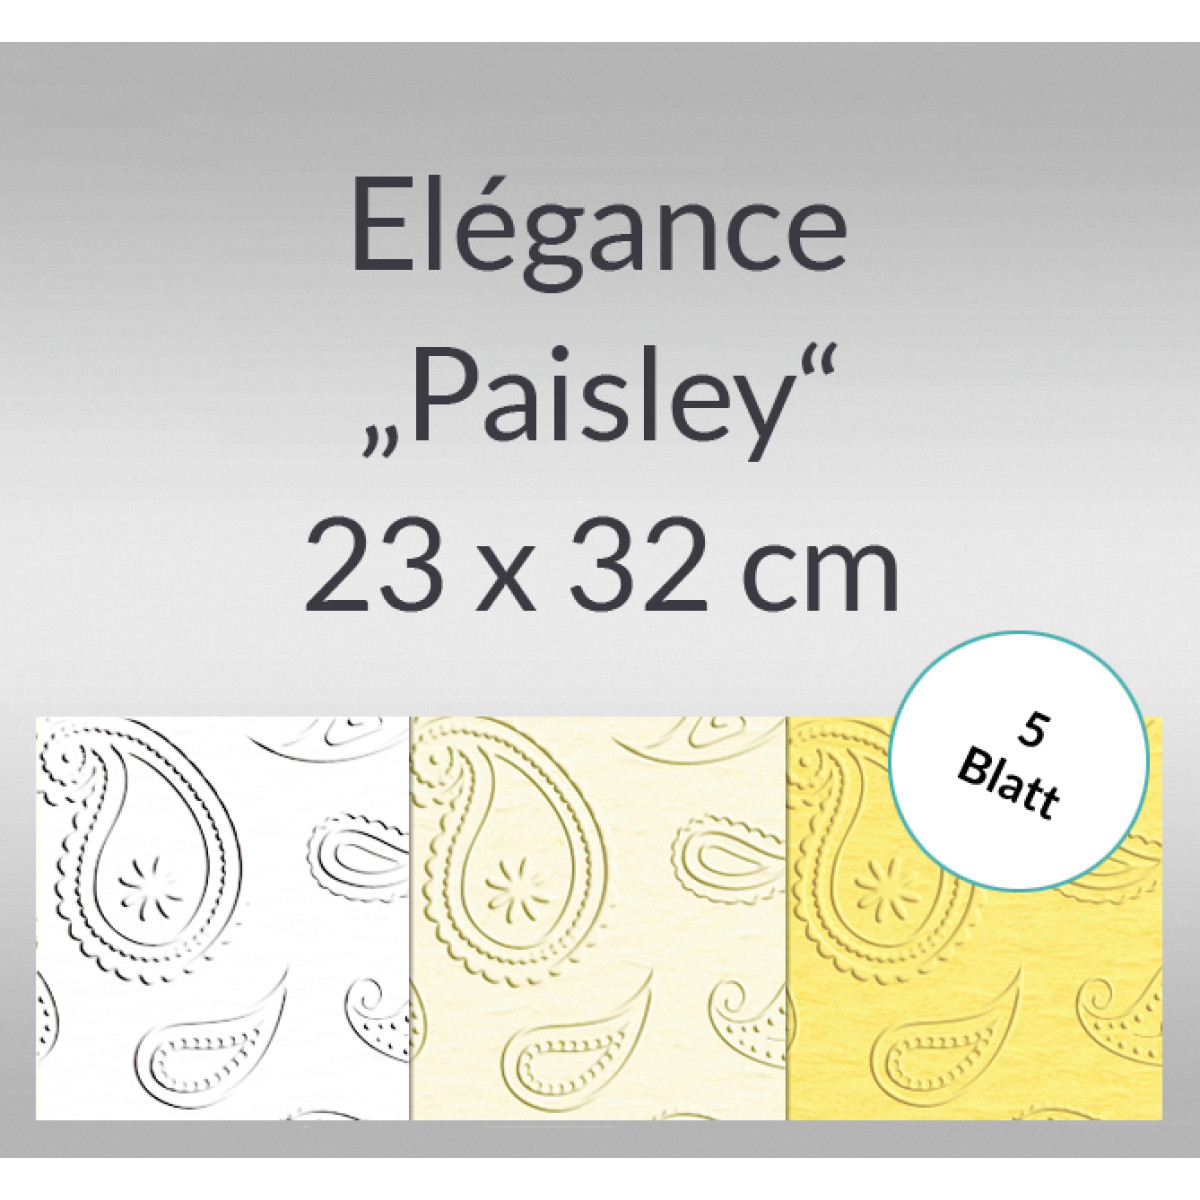 Elegance "Paisley" 220 g/qm 23 x 32 cm - 5 Blatt